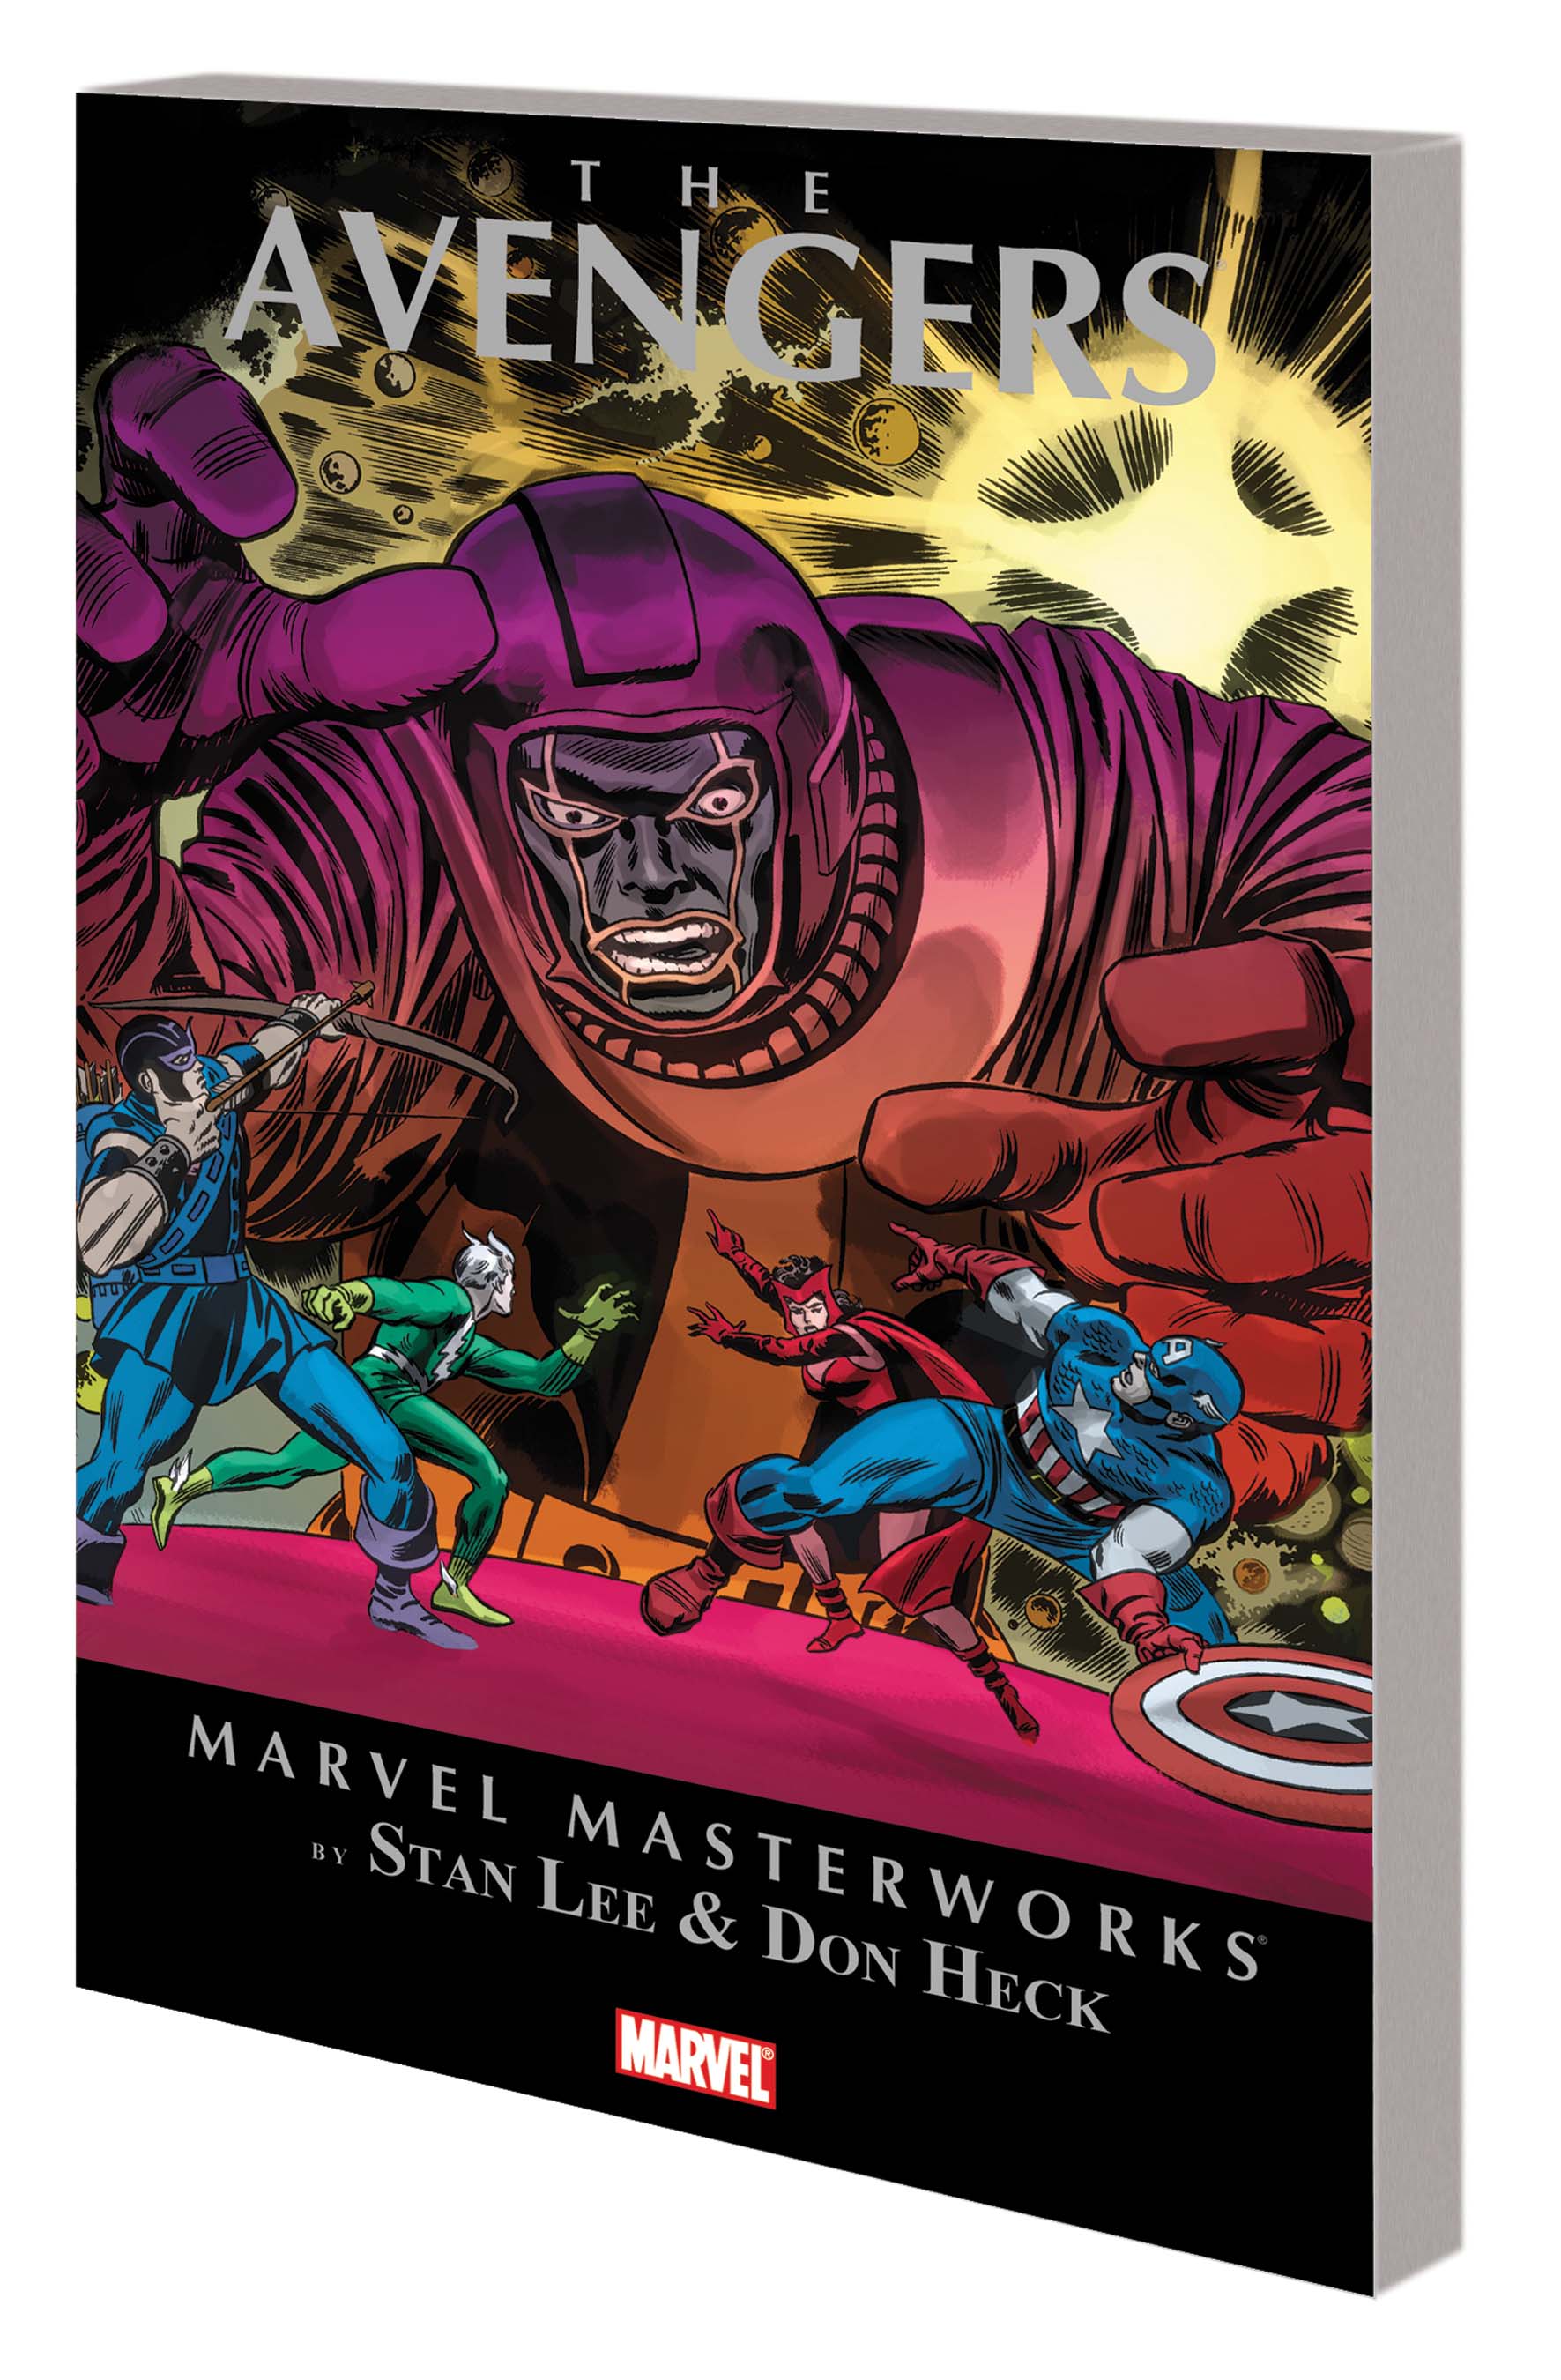 MARVEL MASTERWORKS THE AVENGERS VOL. 3 TPB (Trade Paperback) Comic